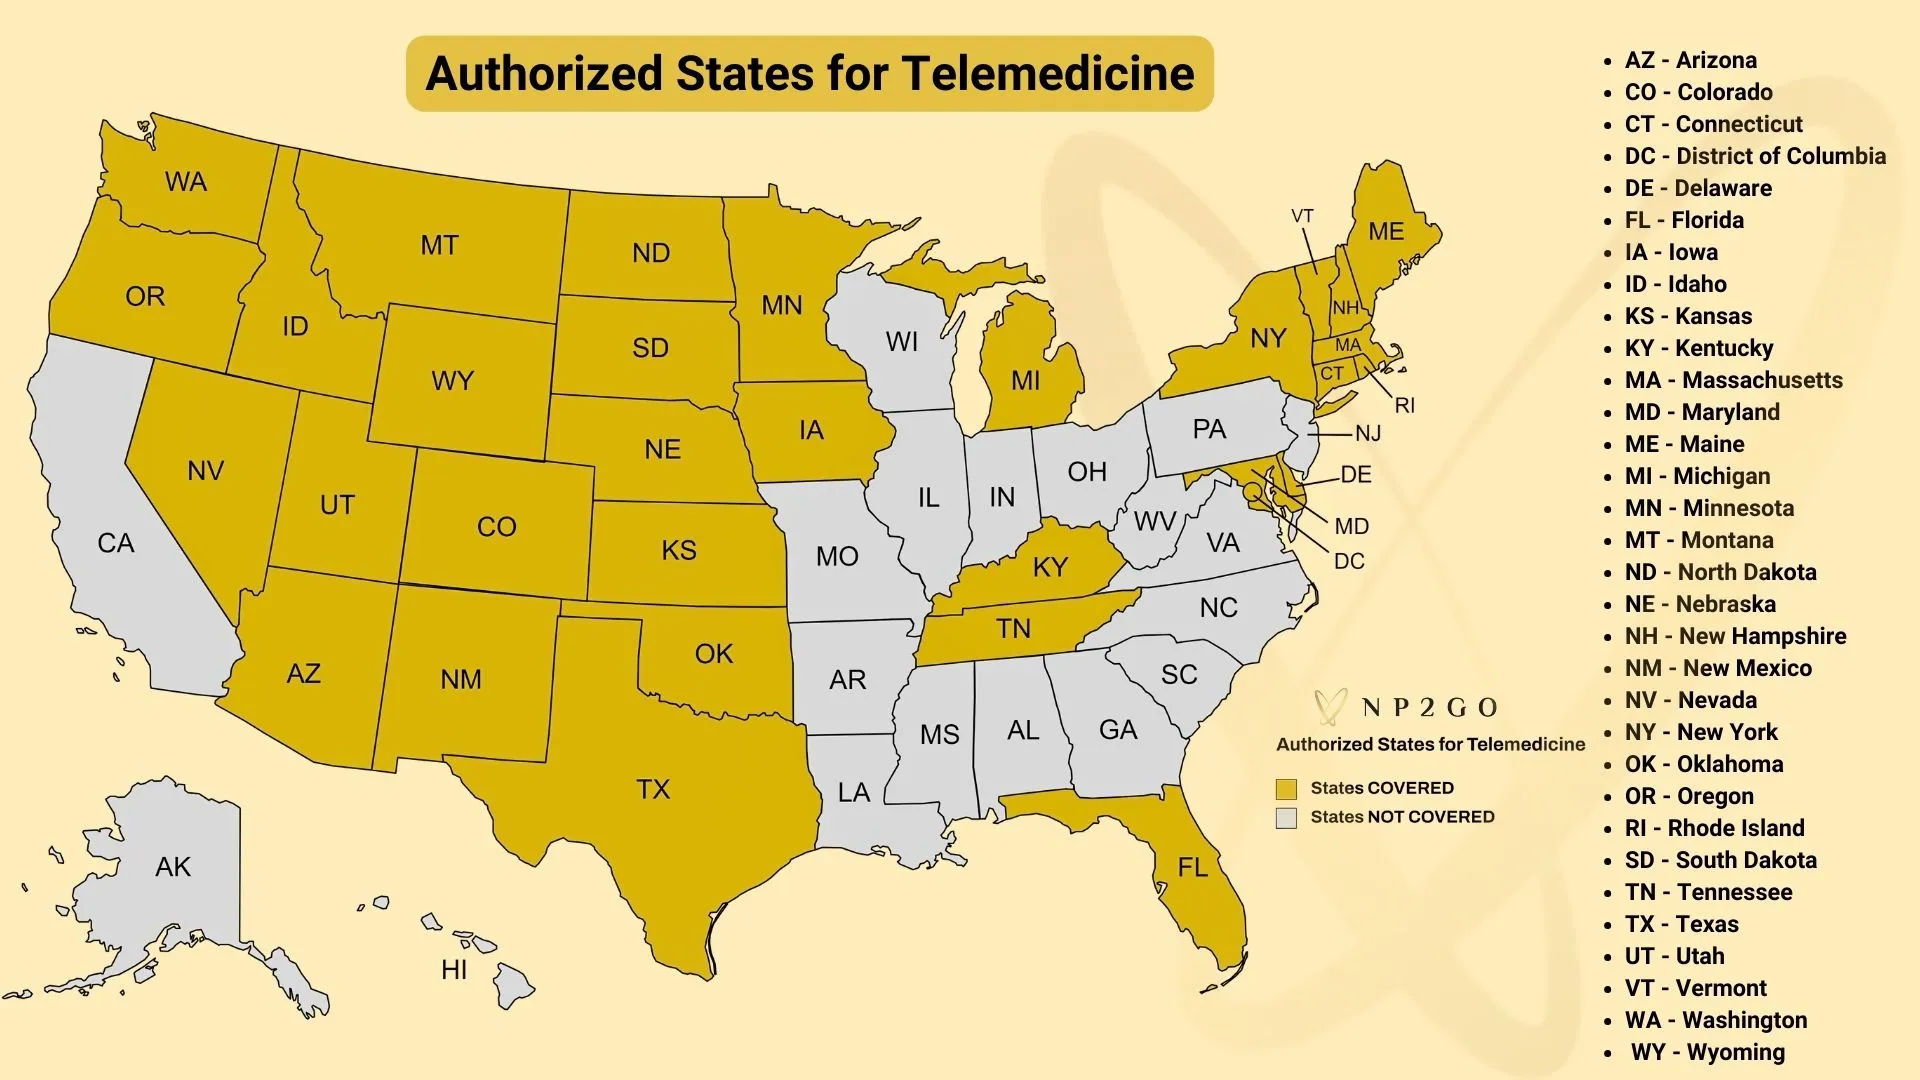 Authorized States for Telemedicine